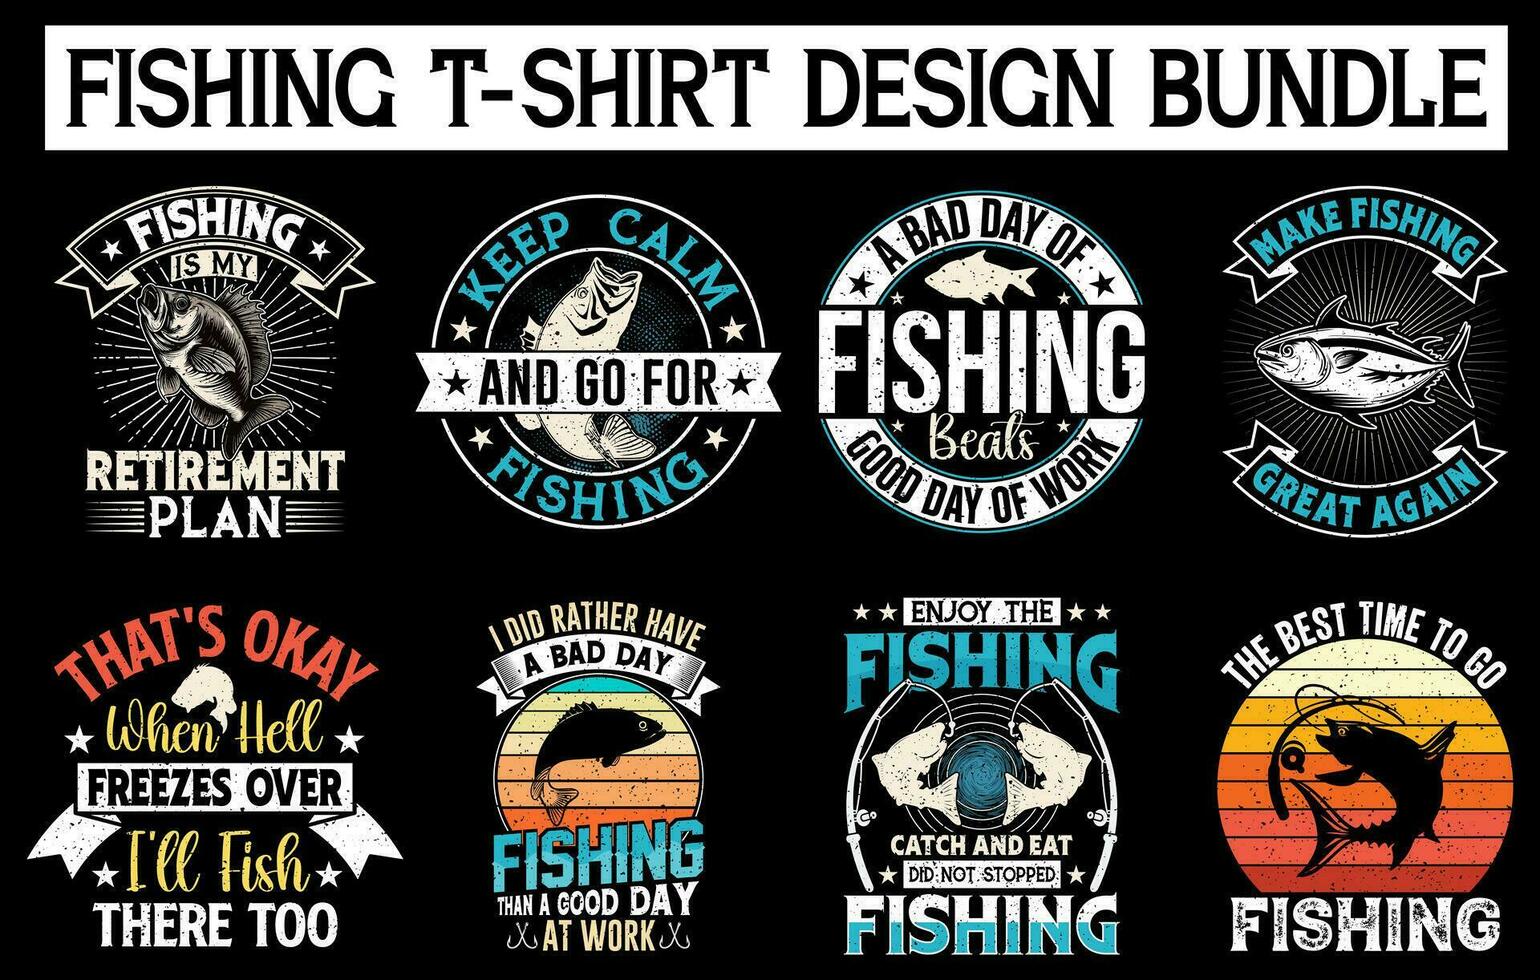 Fishing vintage t shirt design bundle, vintage fishing t shirt set graphic illustration vector